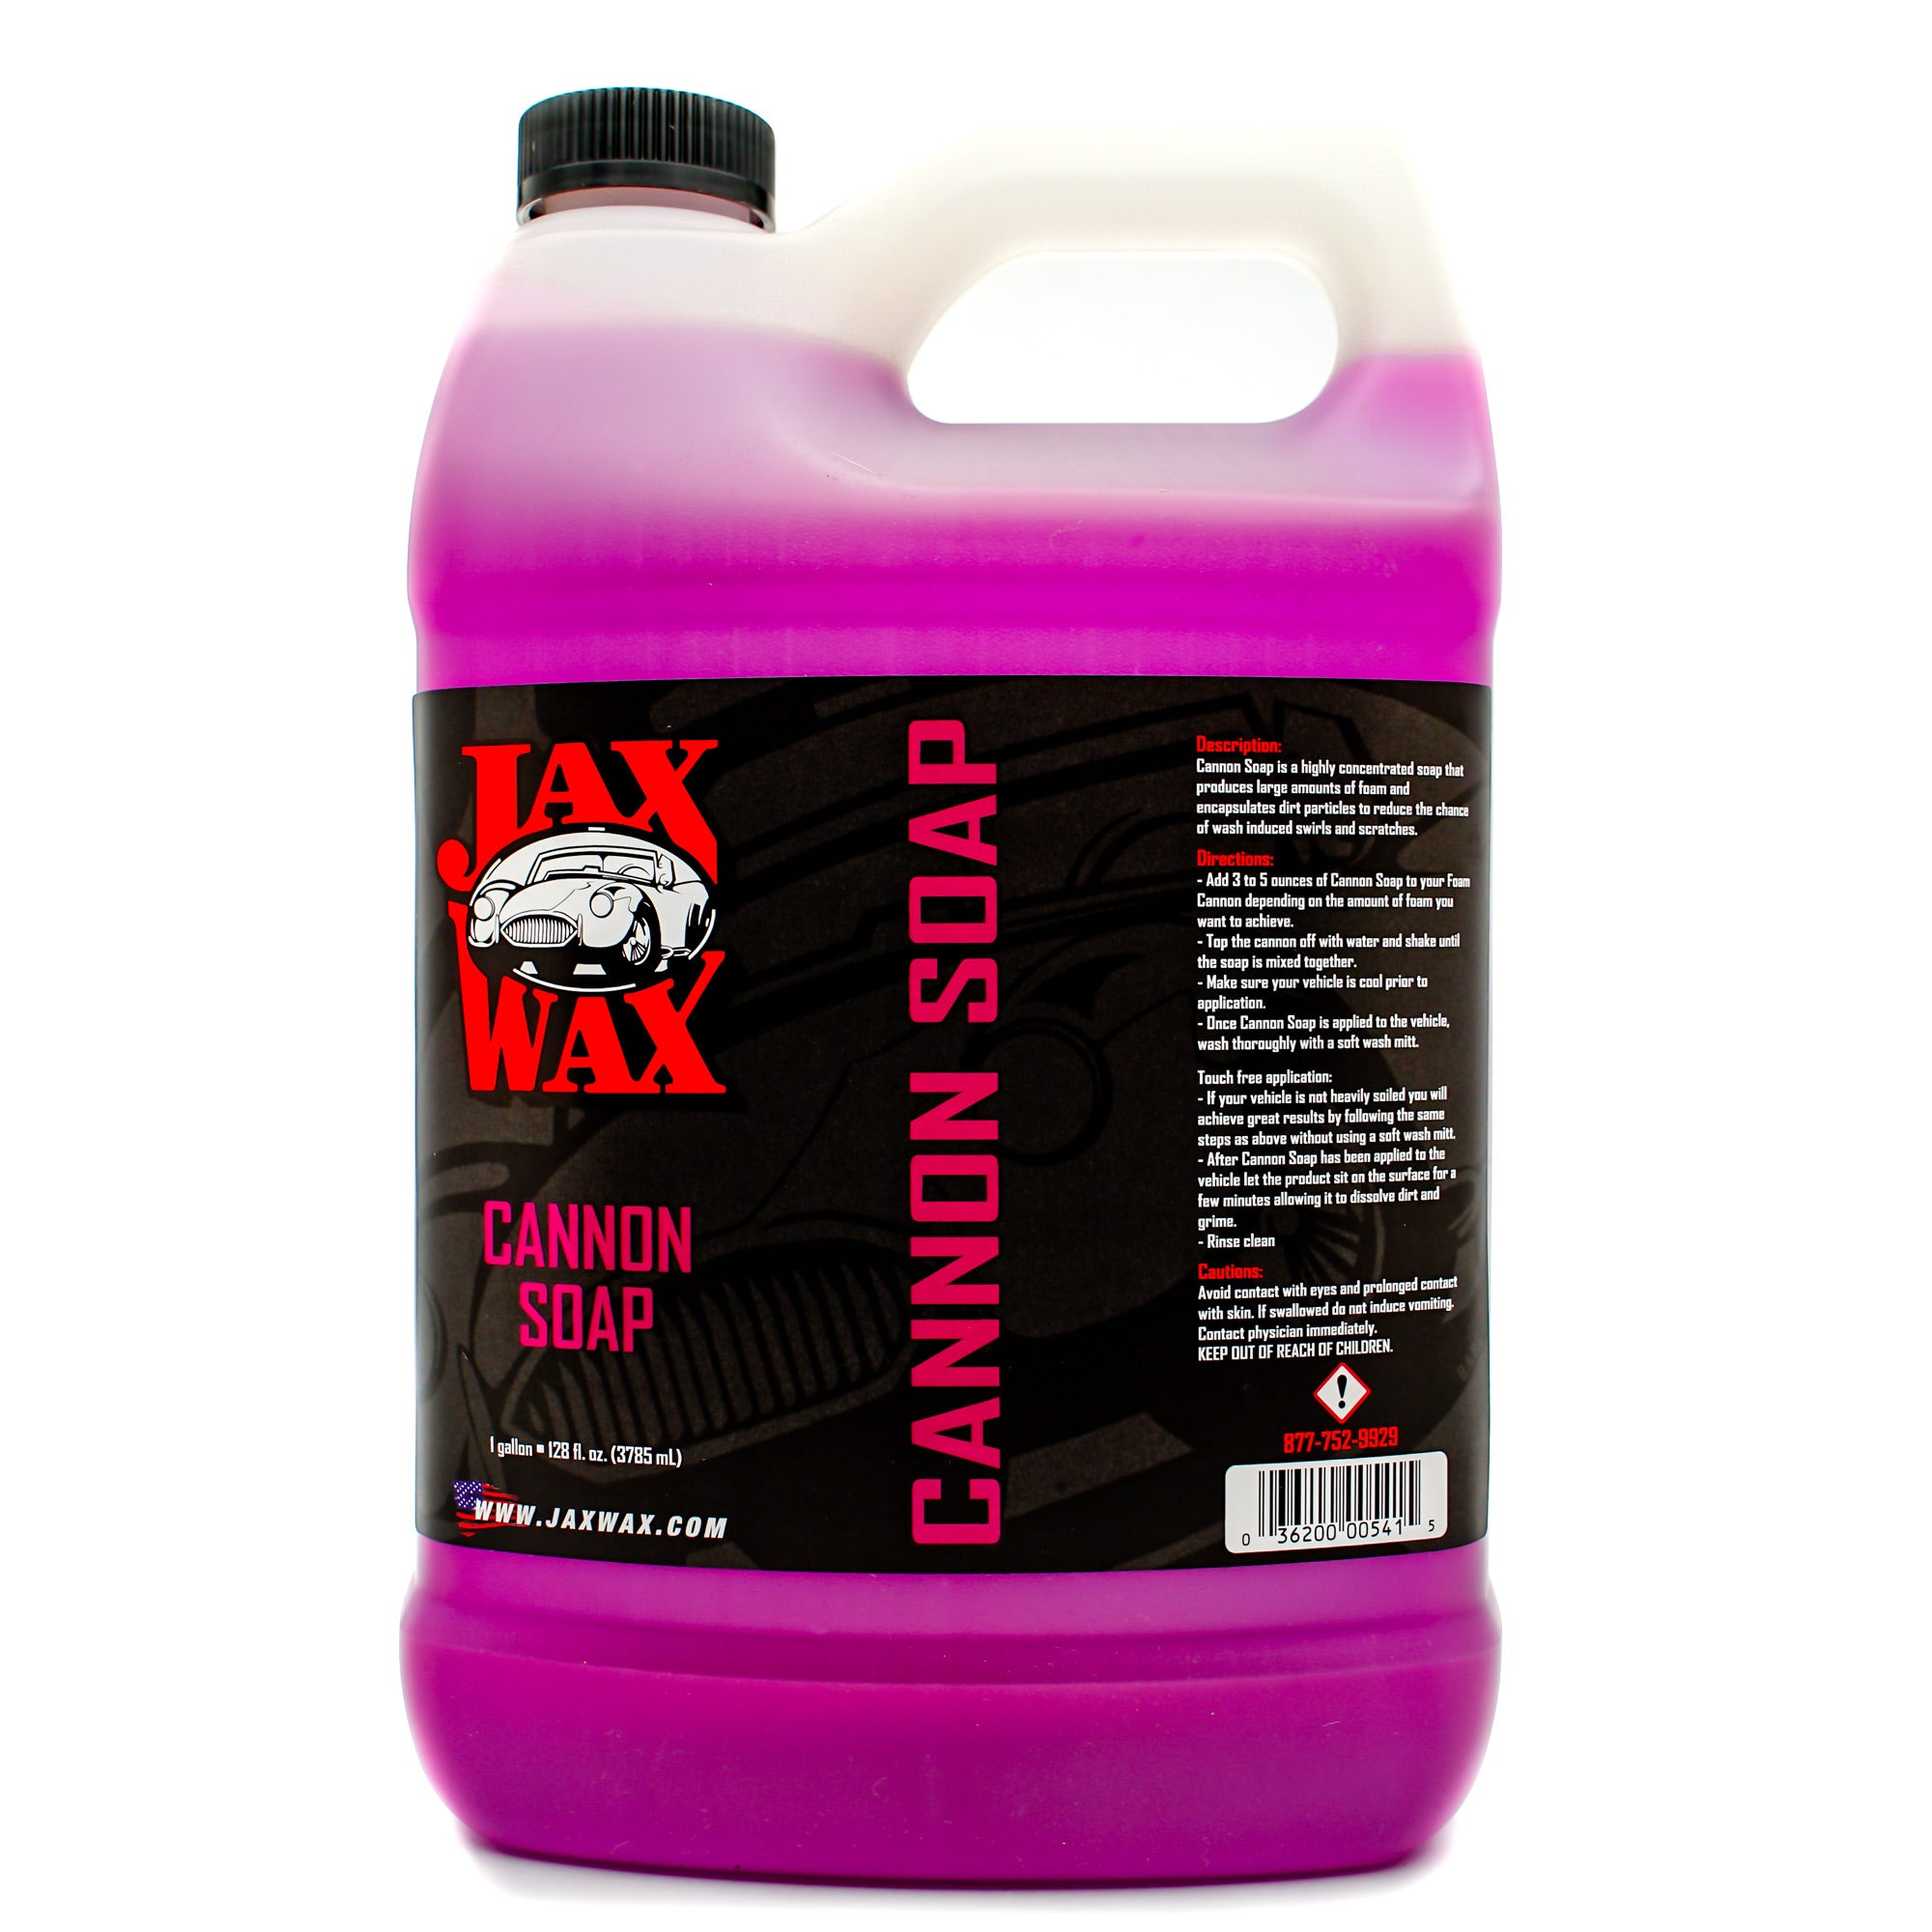 Jax Wax, Cannon Soap, Foam Cannon, Car Soap